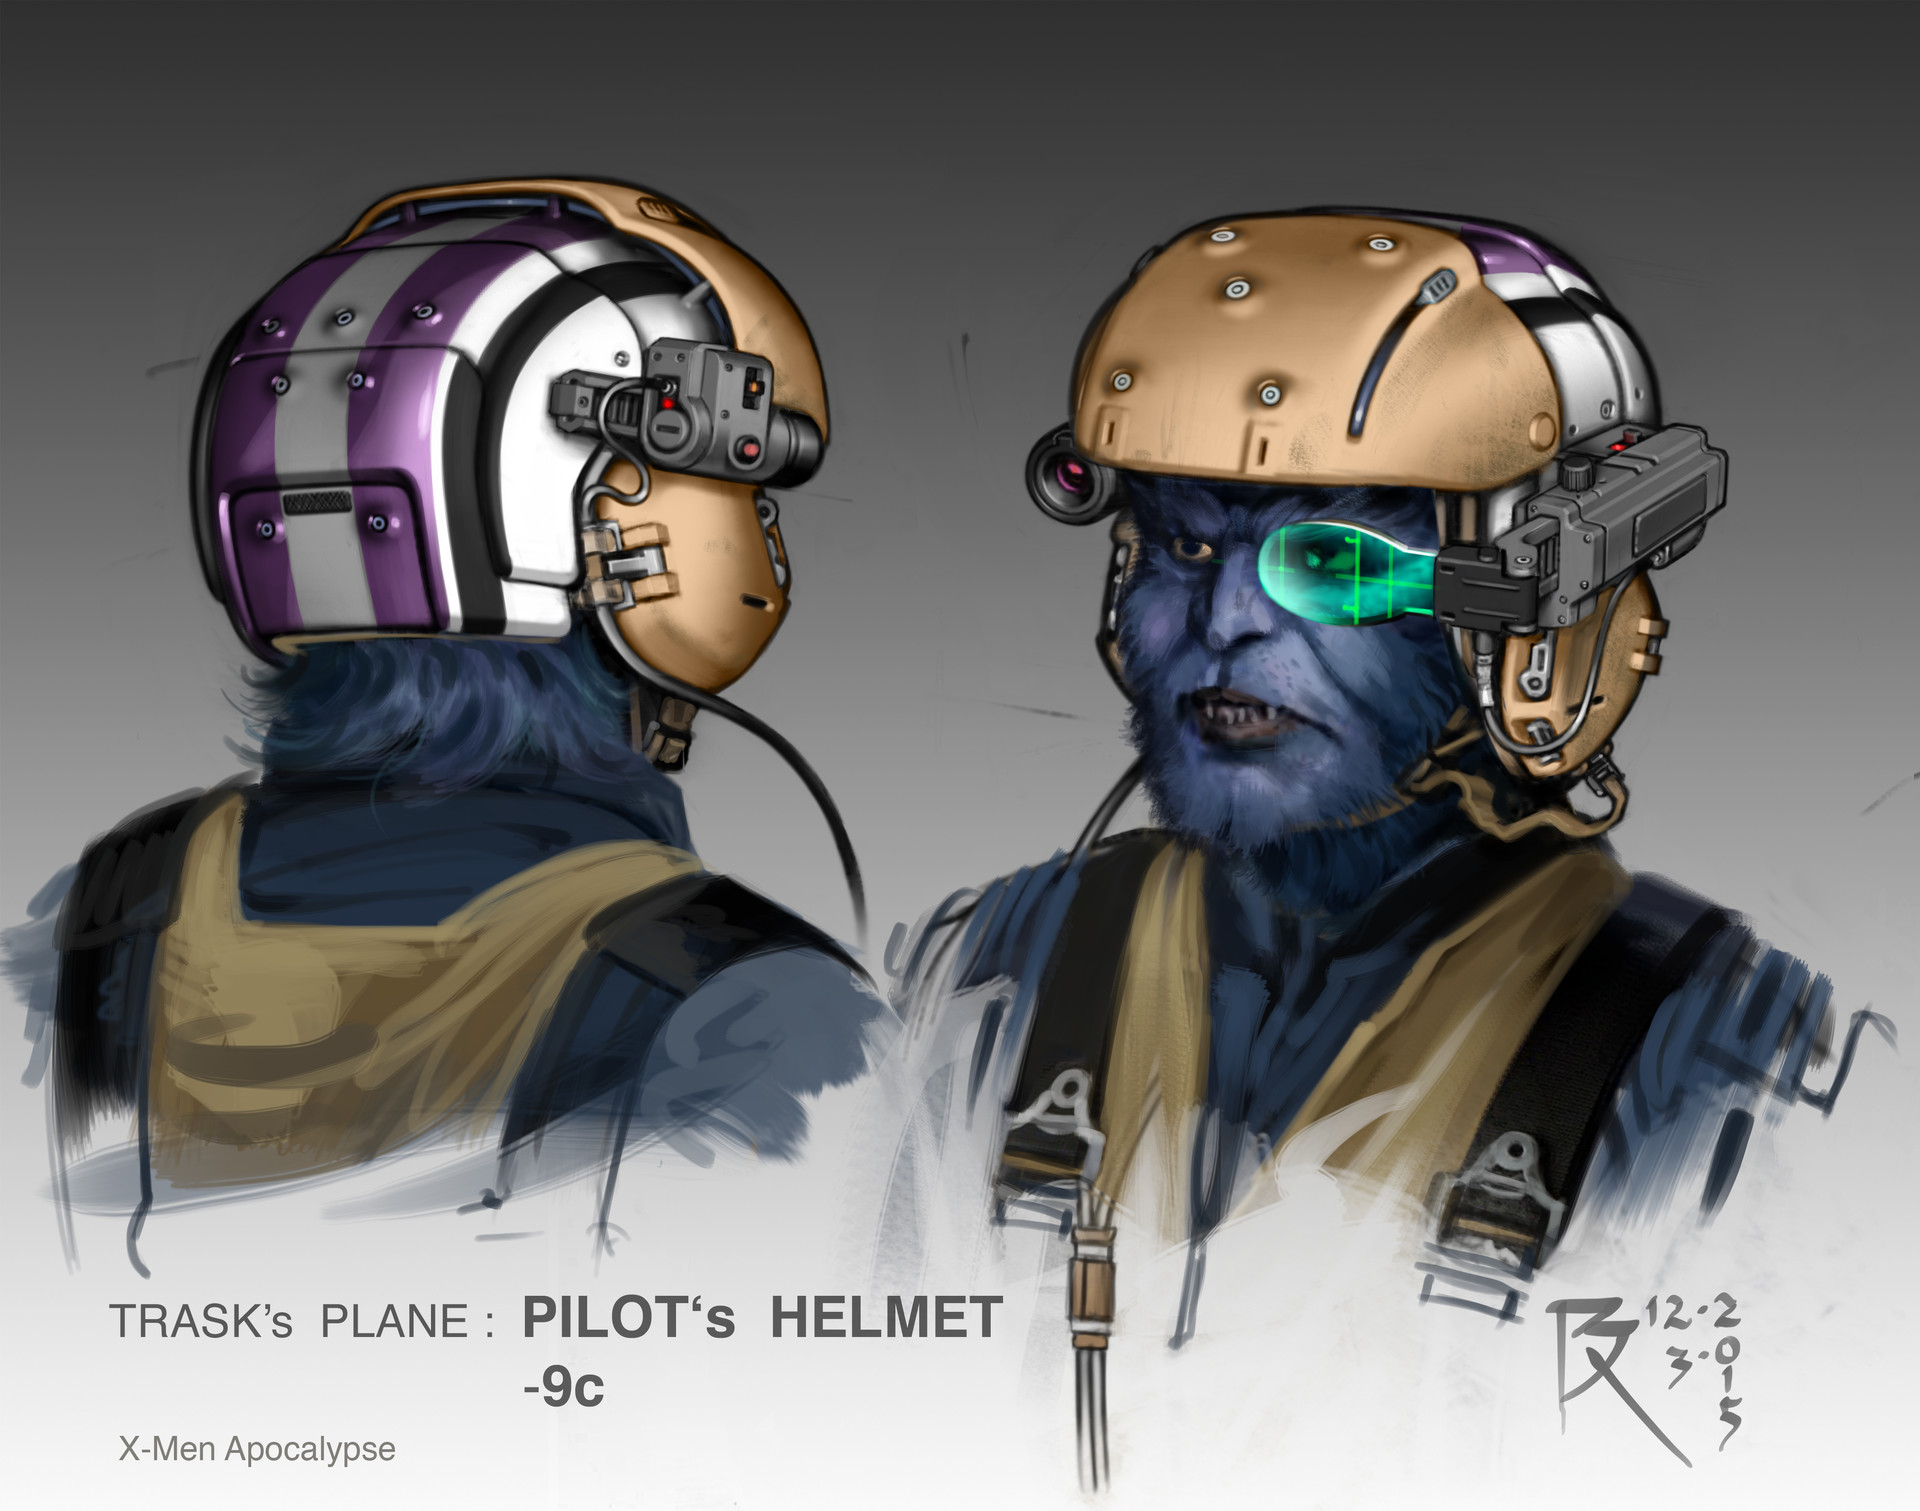 FB_Helmet_Guy on X: Jets concept uniform.  / X